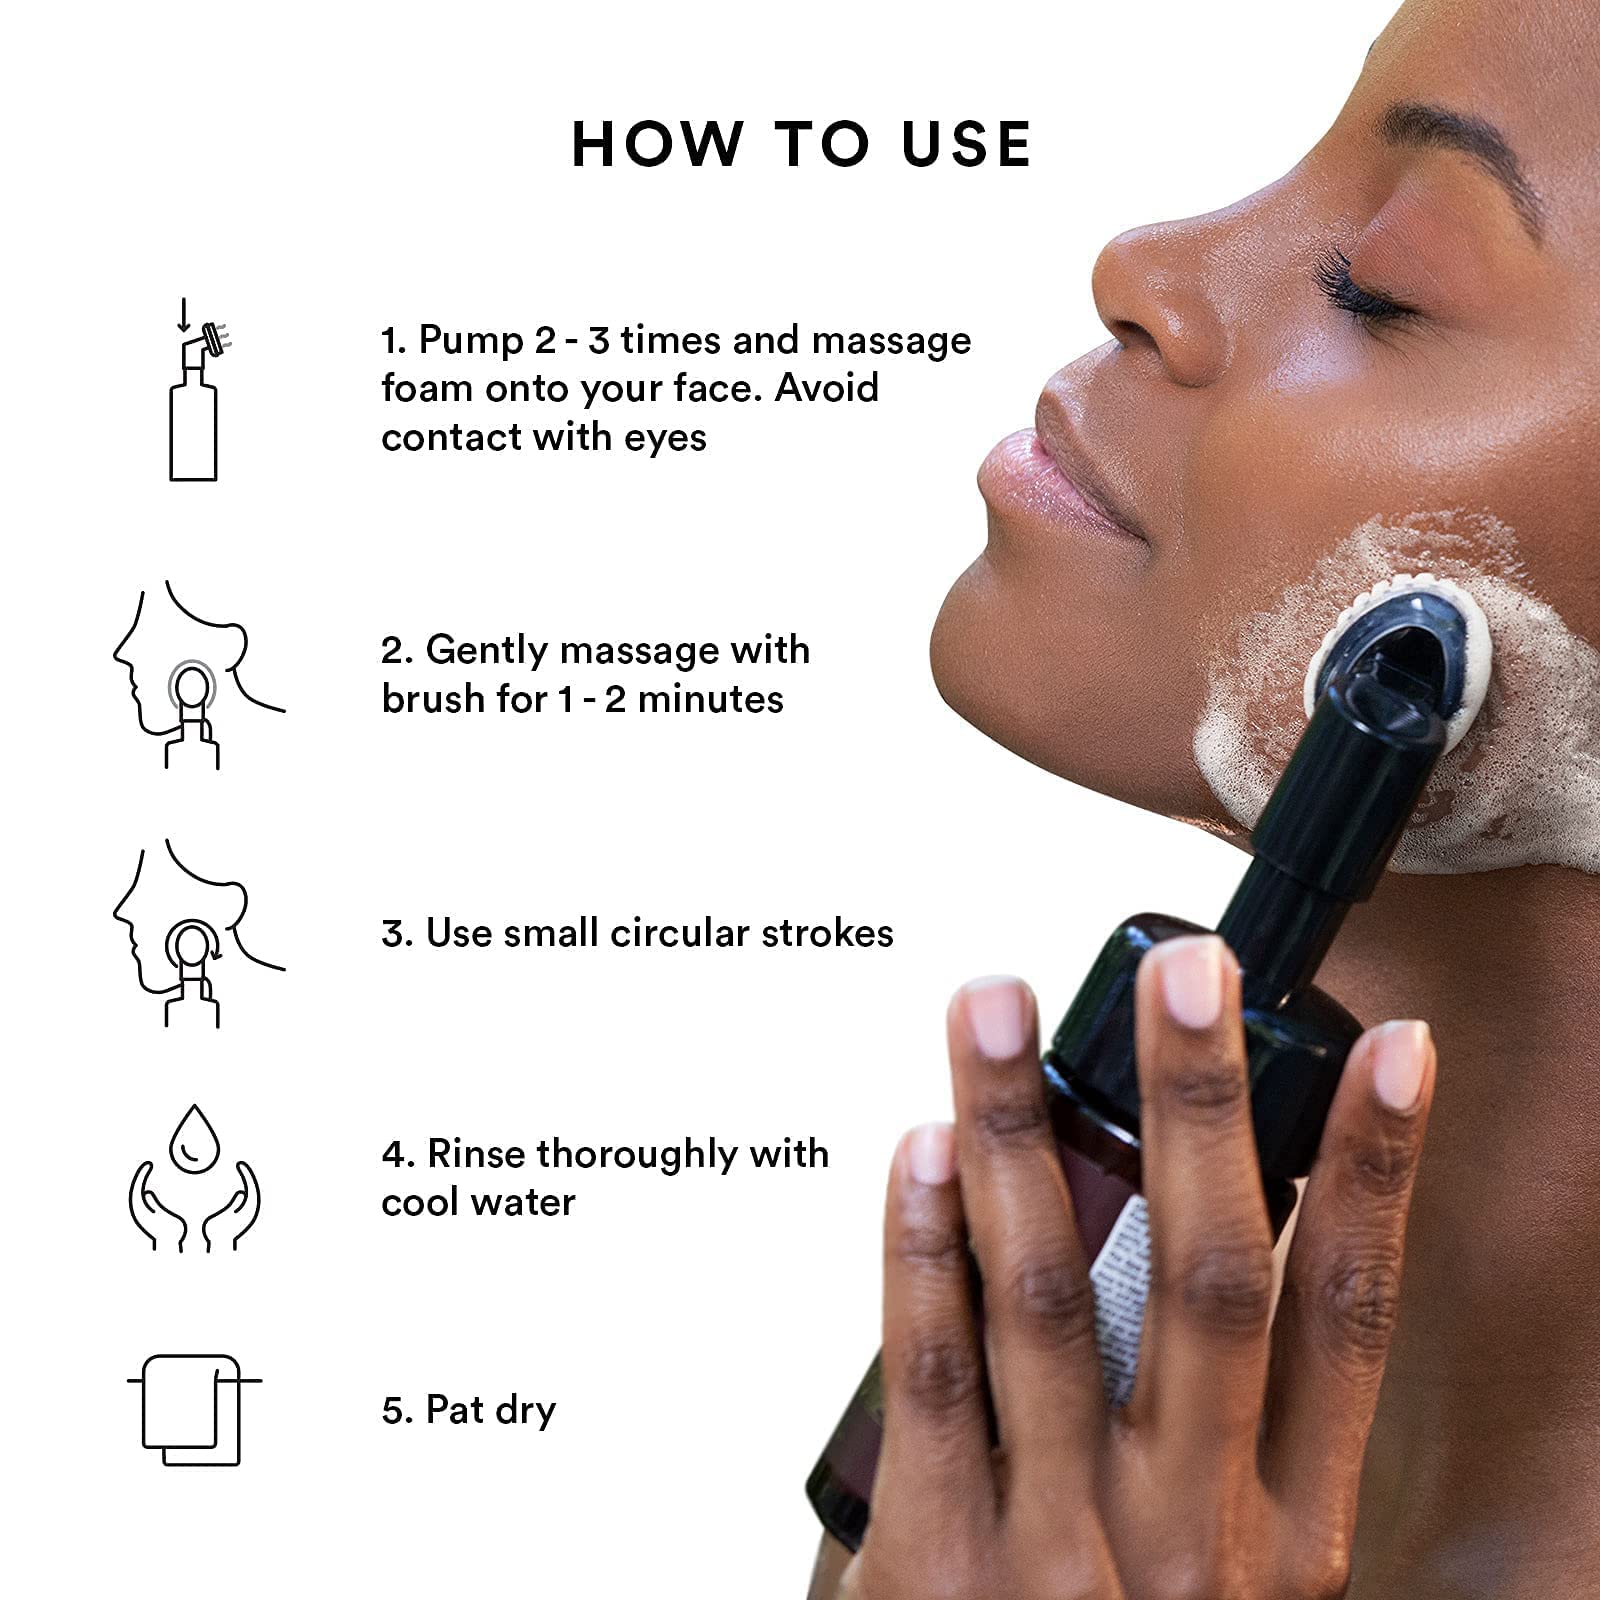 WOW Skin Science Apple Cider Vinegar Foam Exfoliating Face Wash & Brush - Facial Cleanser Acne Face Wash - Face Wash Oily Skin Gentle Face Cleanser - Natural Face Wash Sensitive Skin (5.07 Fl Oz)